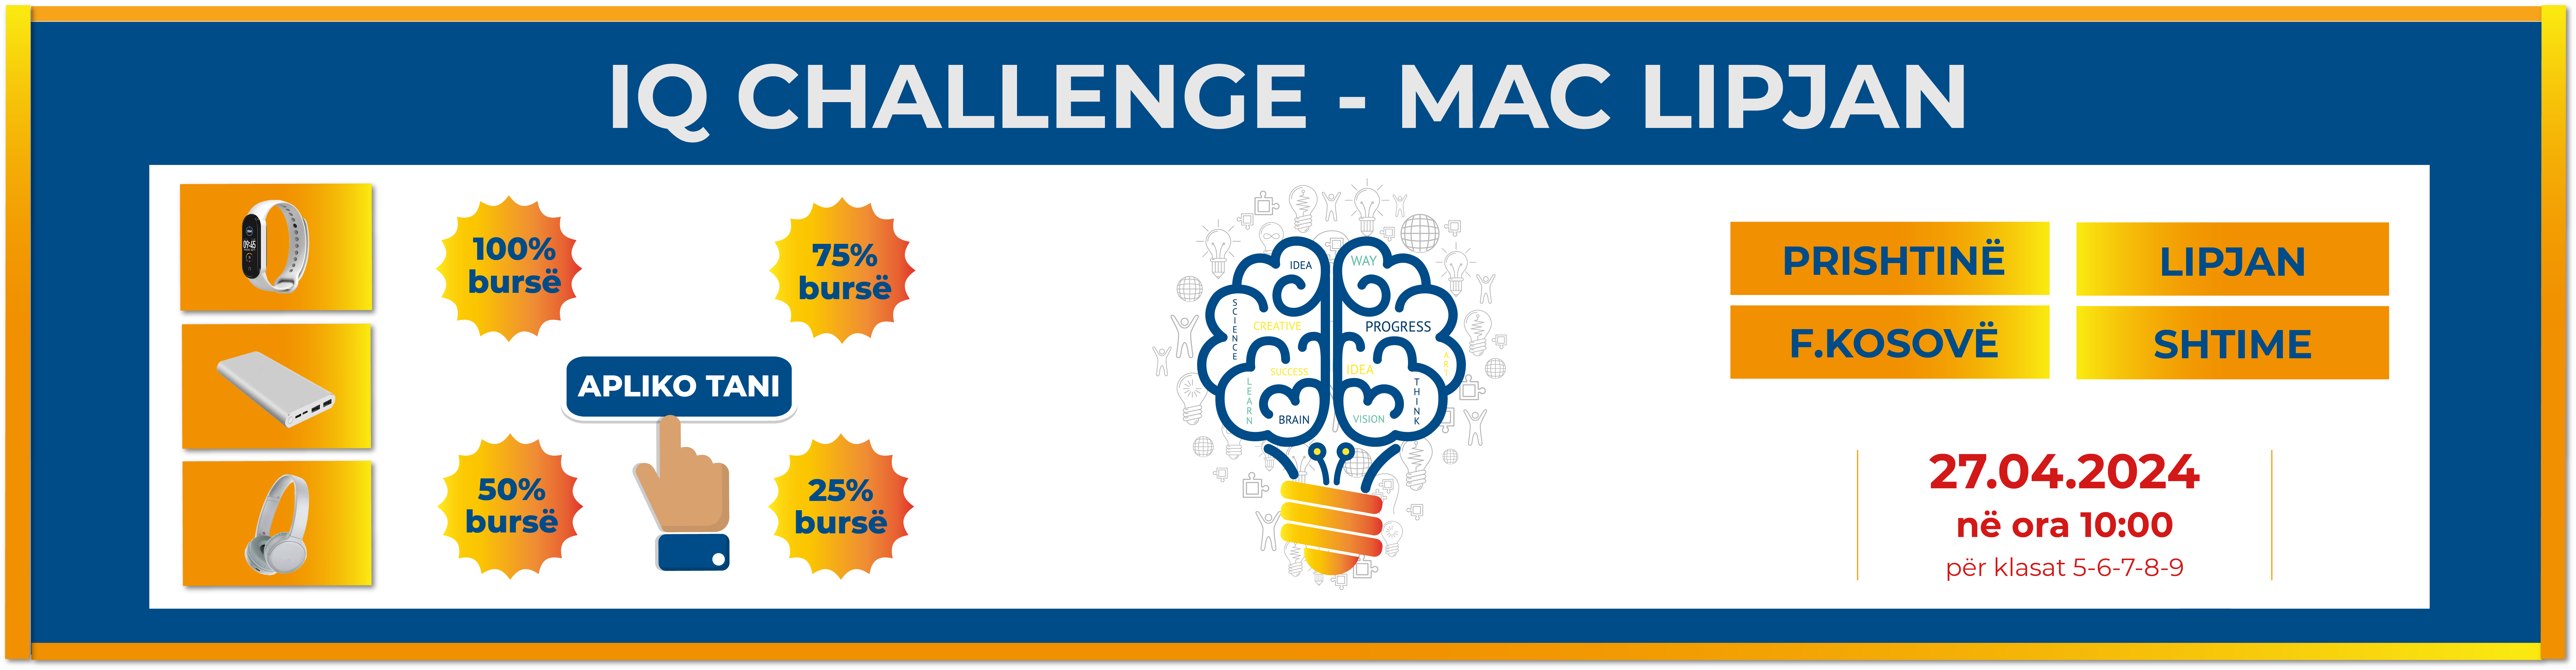 Apply for IQ CHALLENGE – MAC LIPJAN